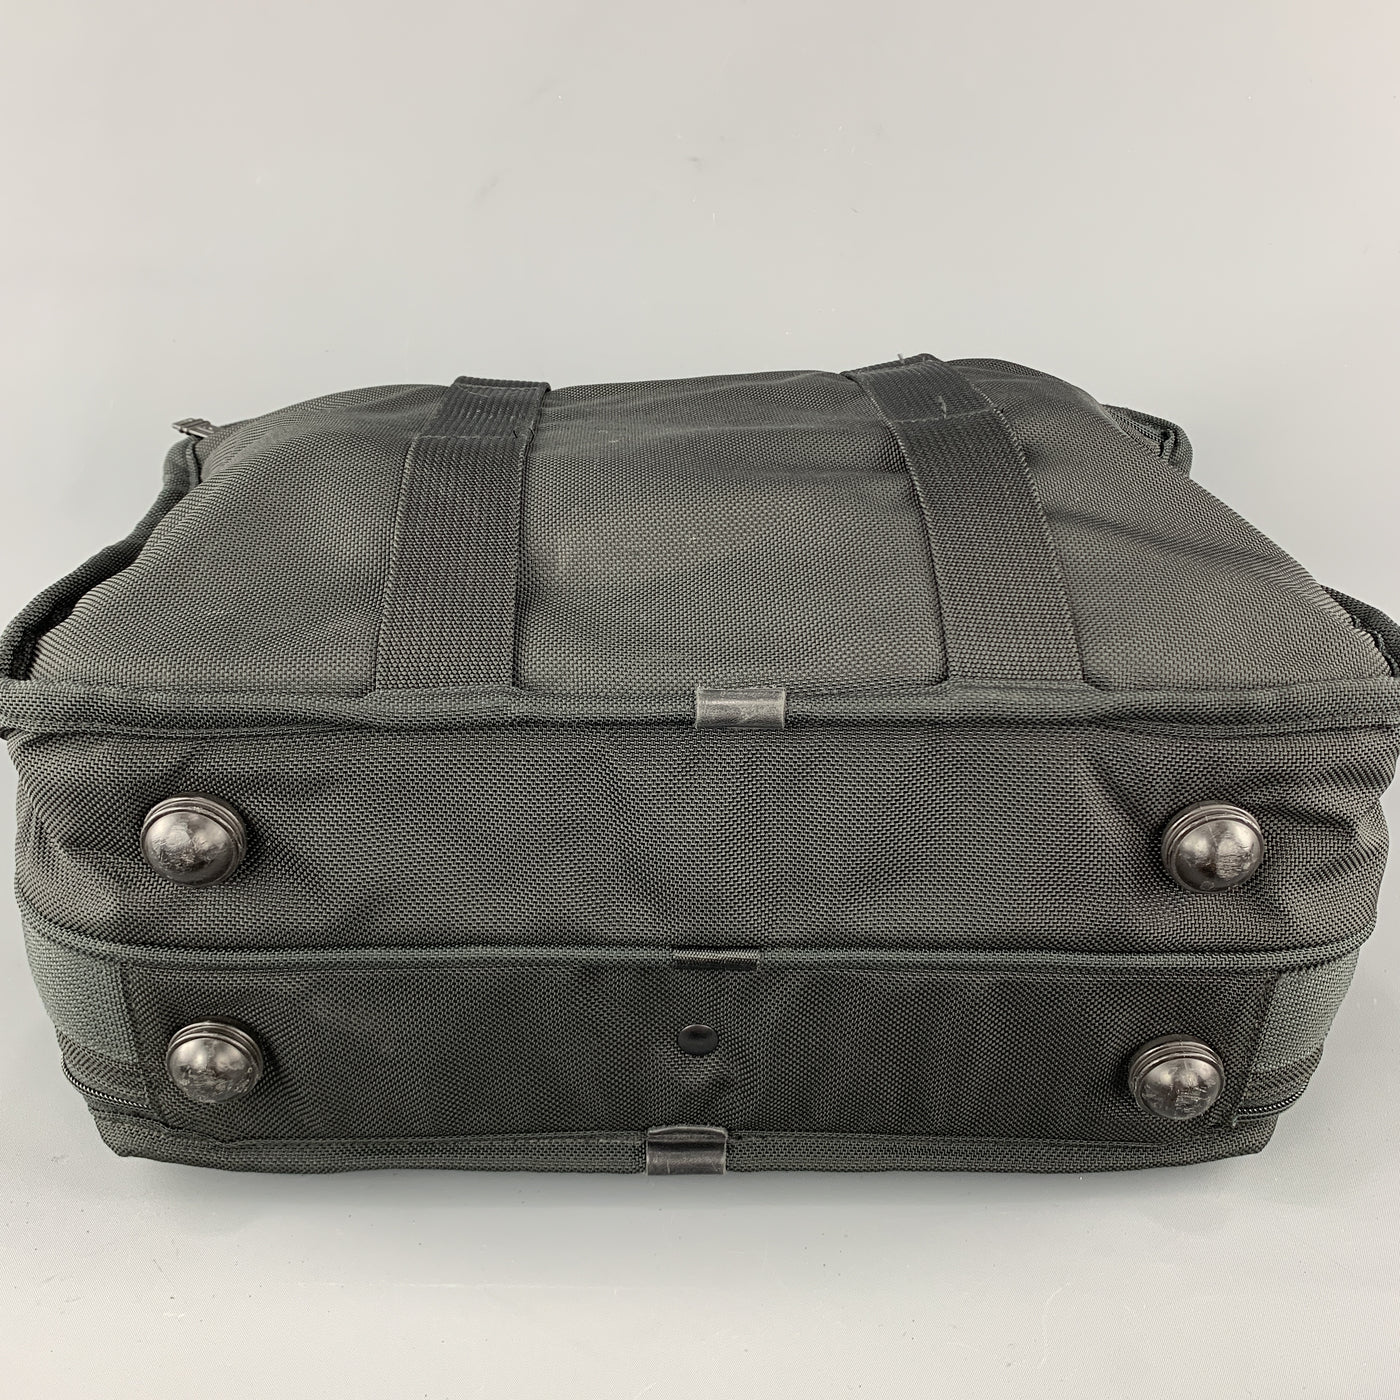 TUMI Black NylonCanvas Carry On Travel Bag